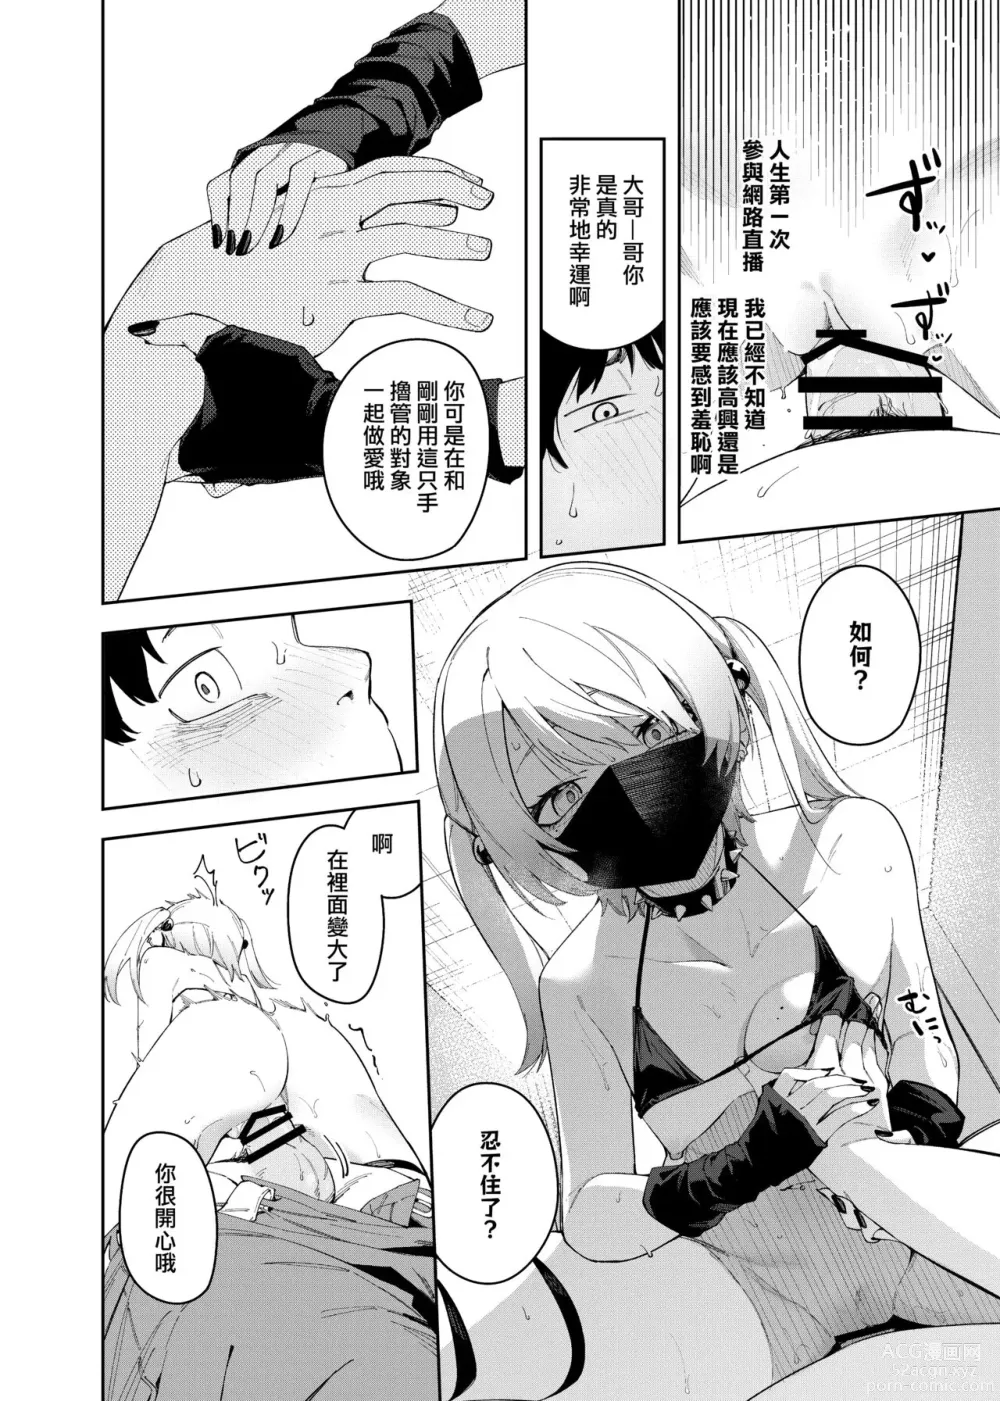 Page 36 of manga rinzin ha yuumei haisin sya4 nin me